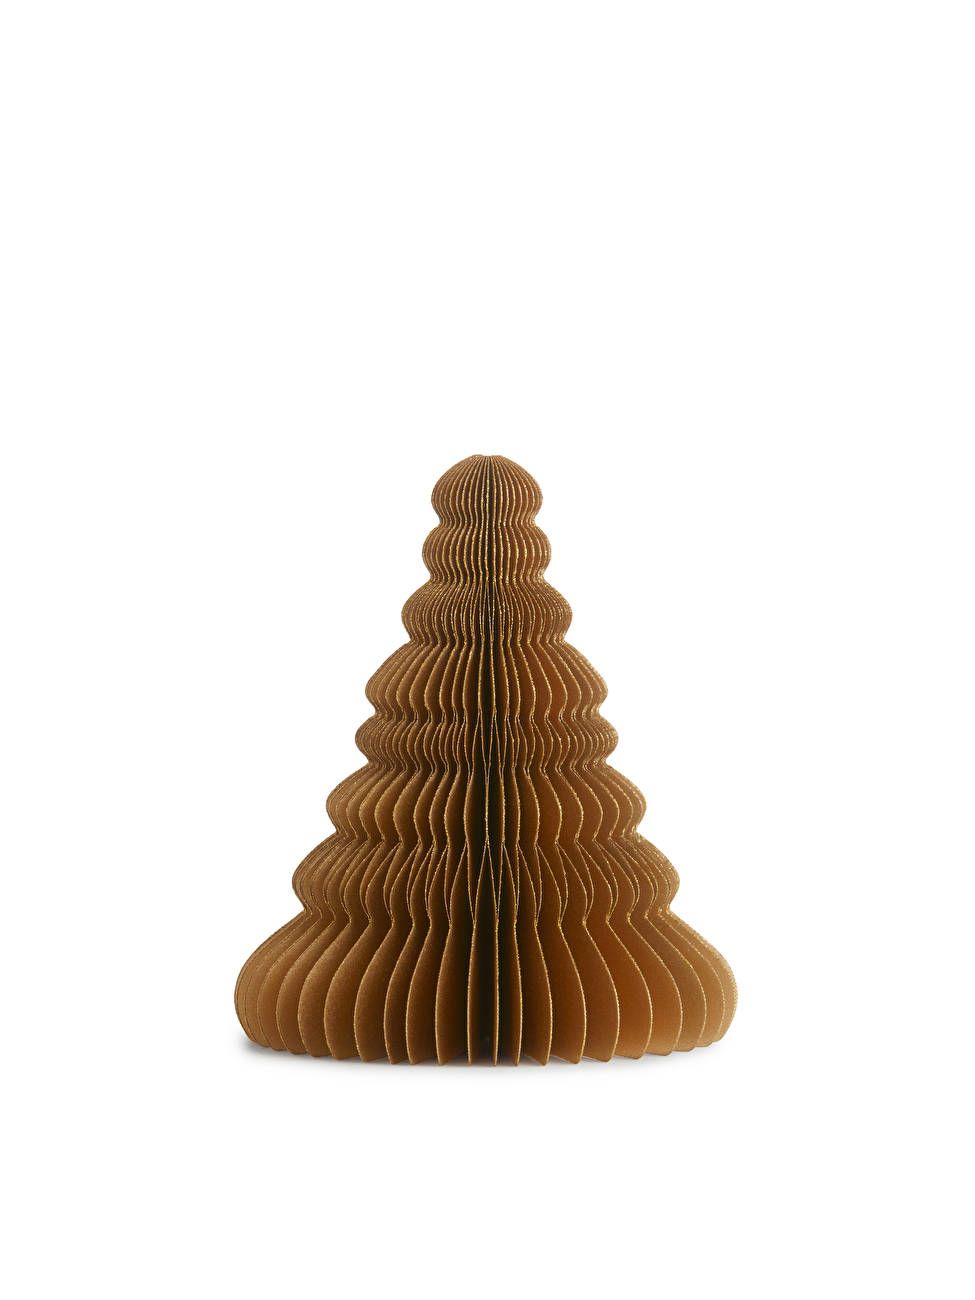 Honeycomb Table Decoration 15 cm | ARKET (US&UK)